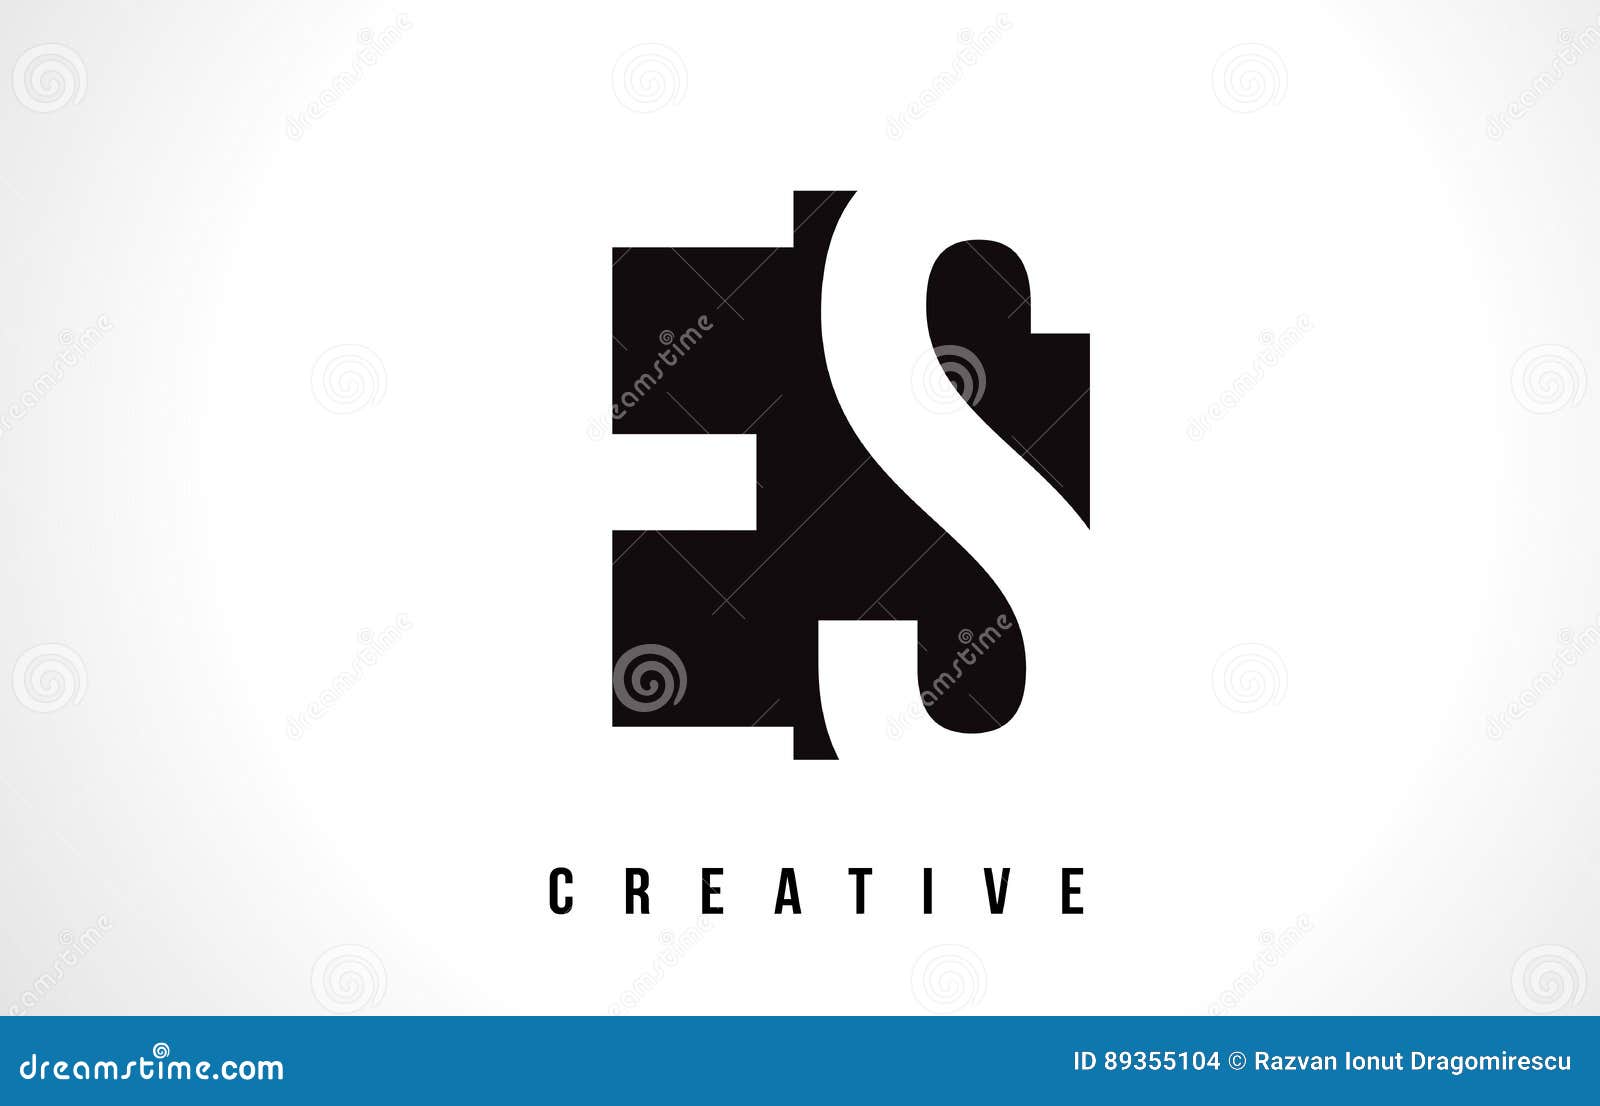 es e s white letter logo  with black square.